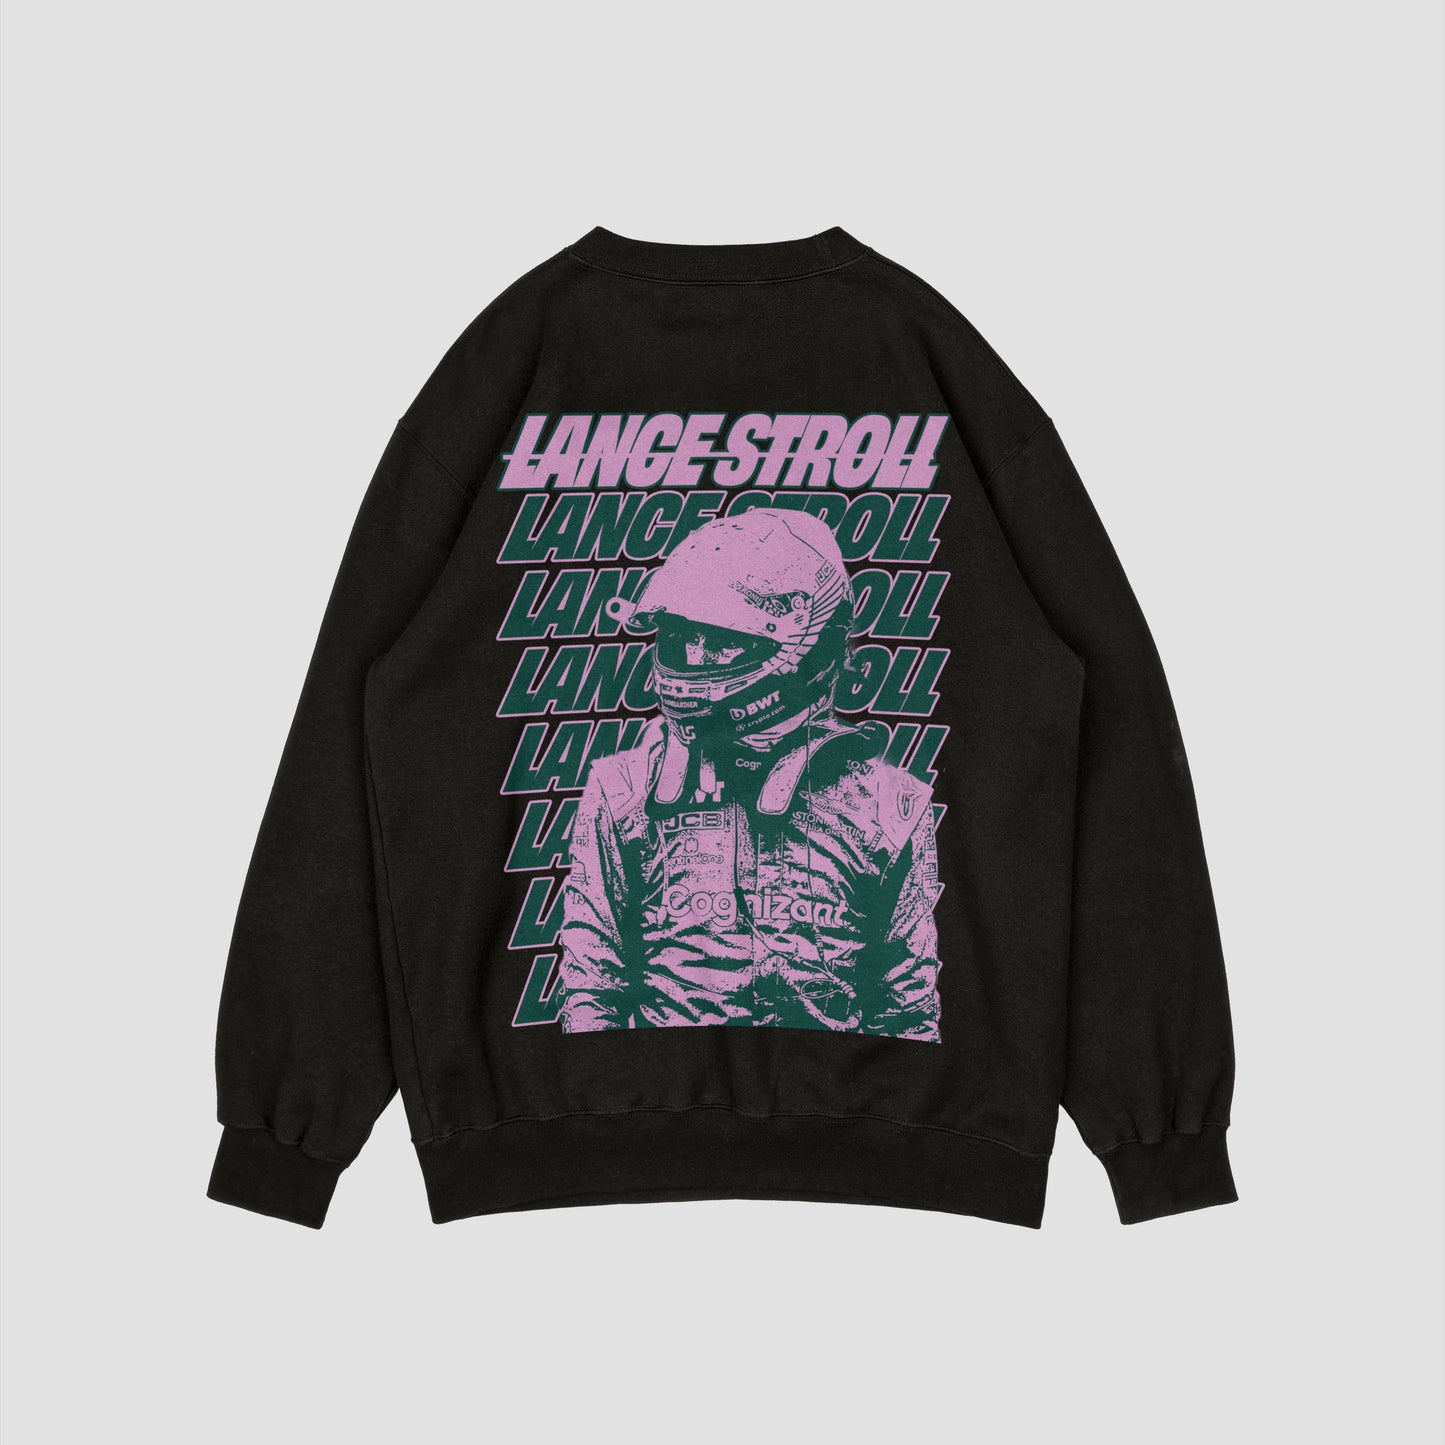 Lance Stroll Crewneck sweater